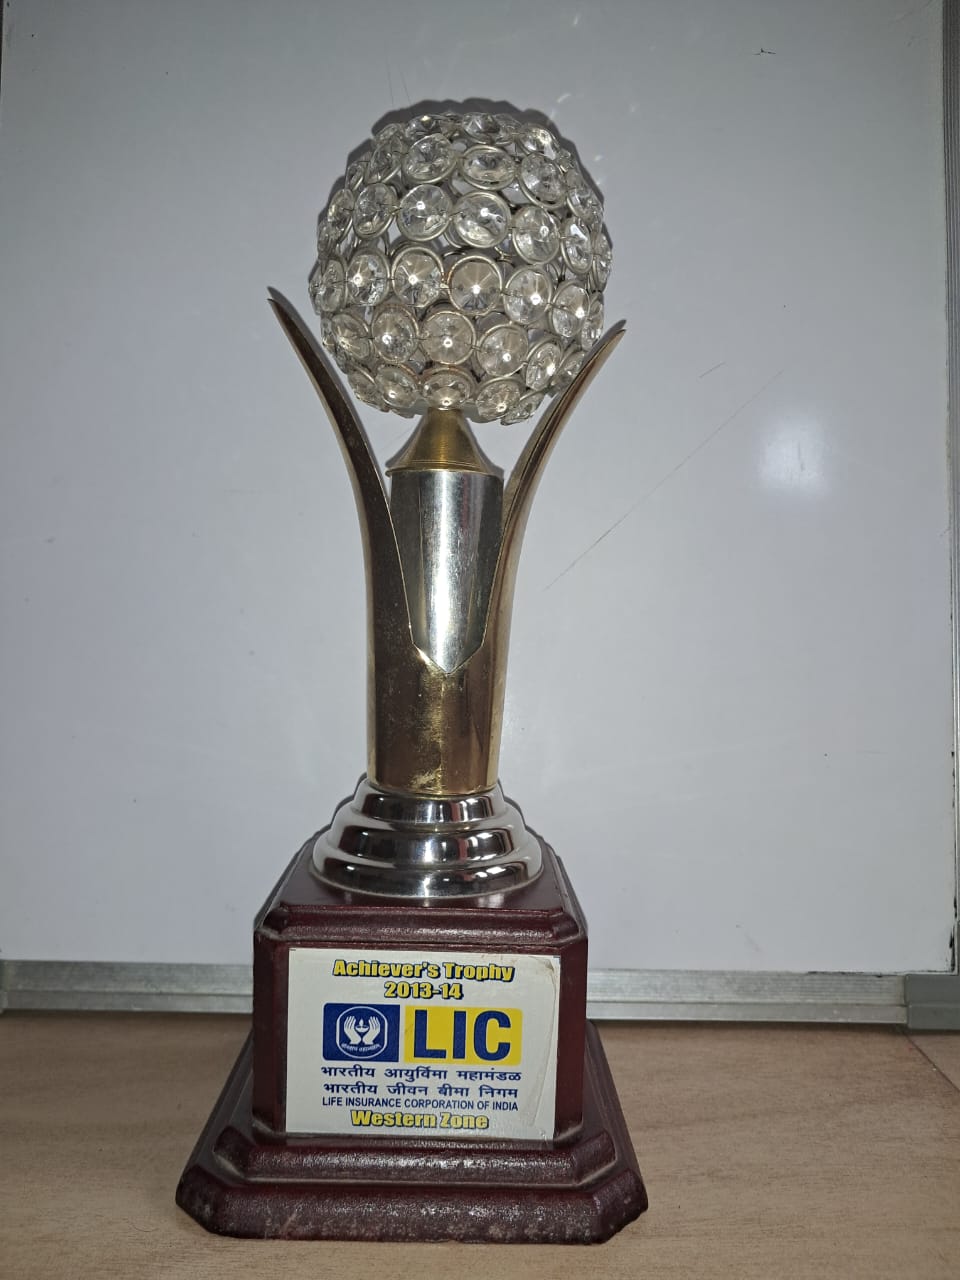 Achiever's Trophy 2013-14